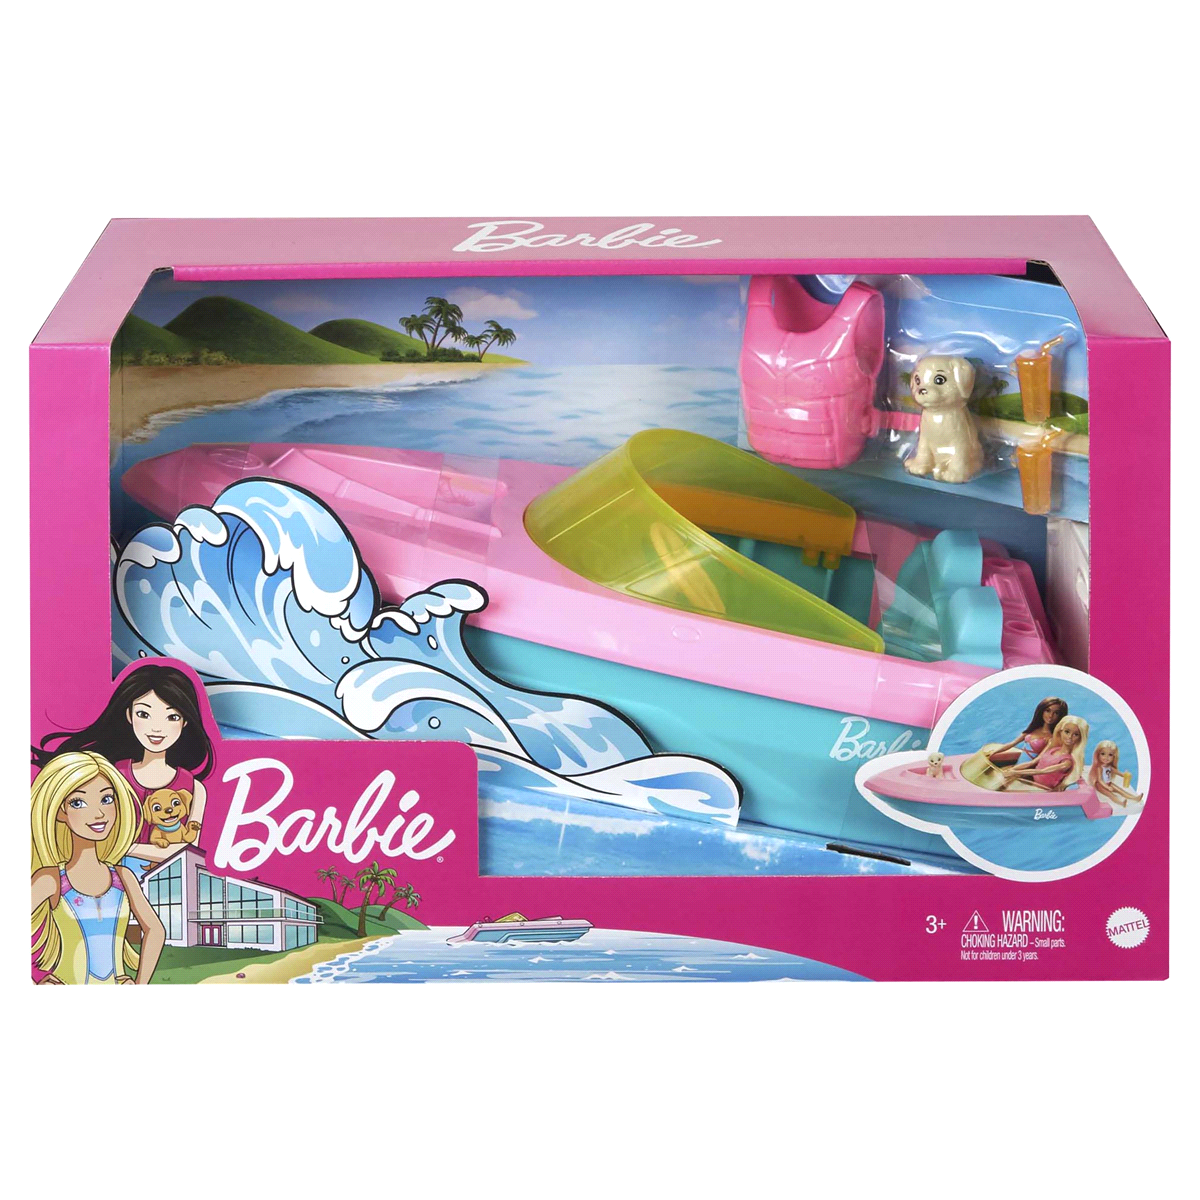 Barbie Boat